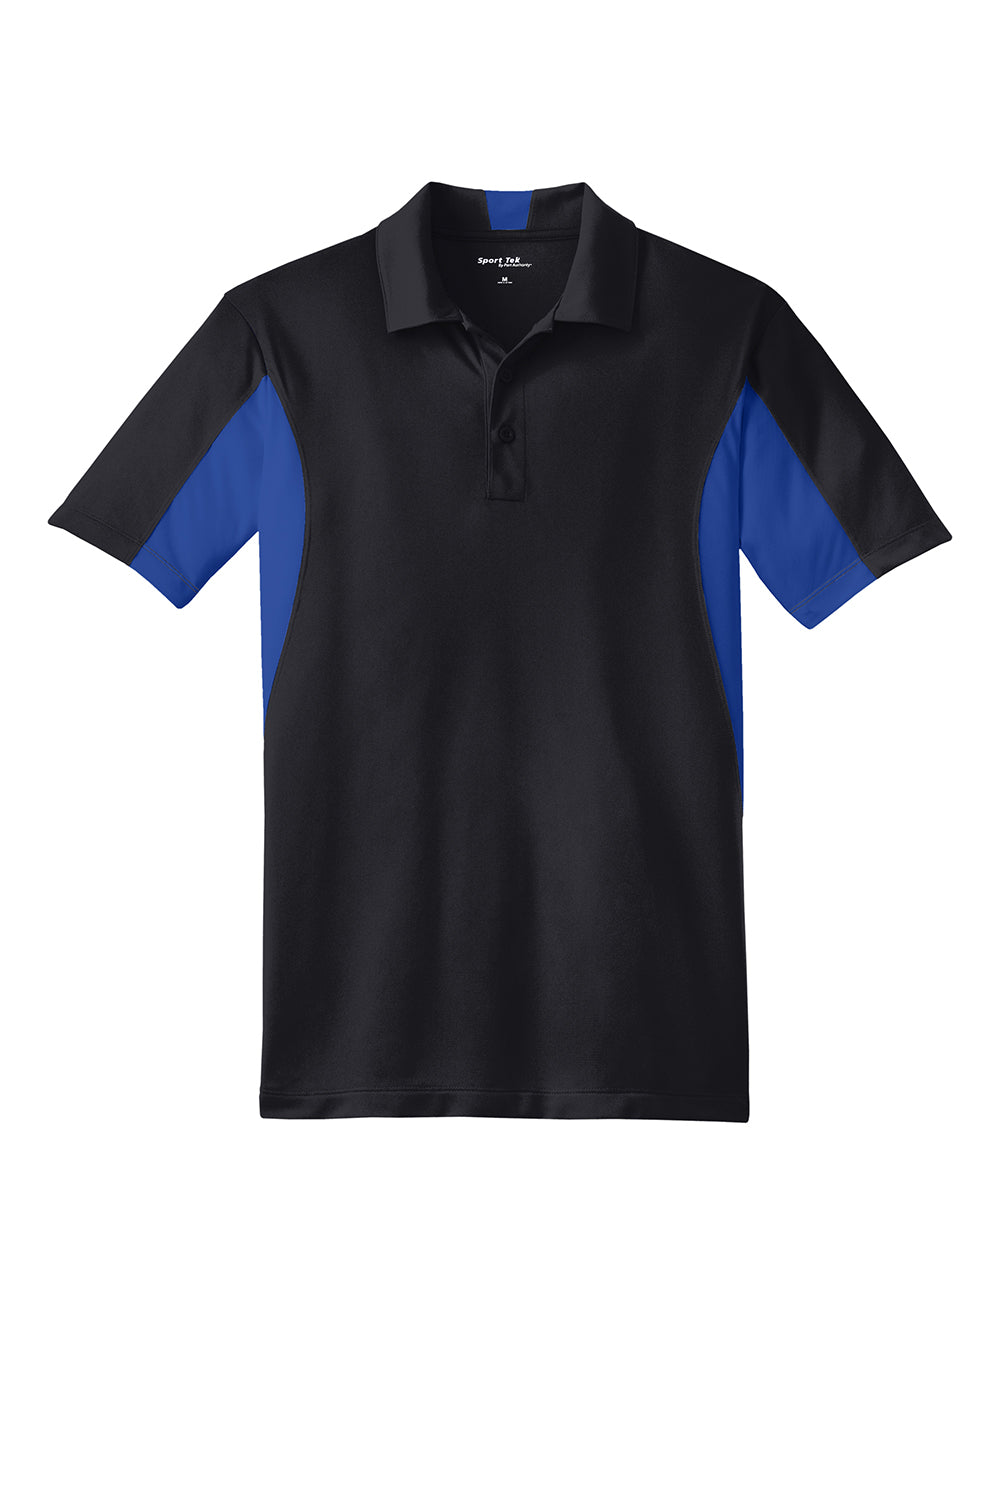 Sport-Tek Mens Sport-Wick Moisture Wicking Short Sleeve Polo Shirt Black/True Royal Blue Flat Front